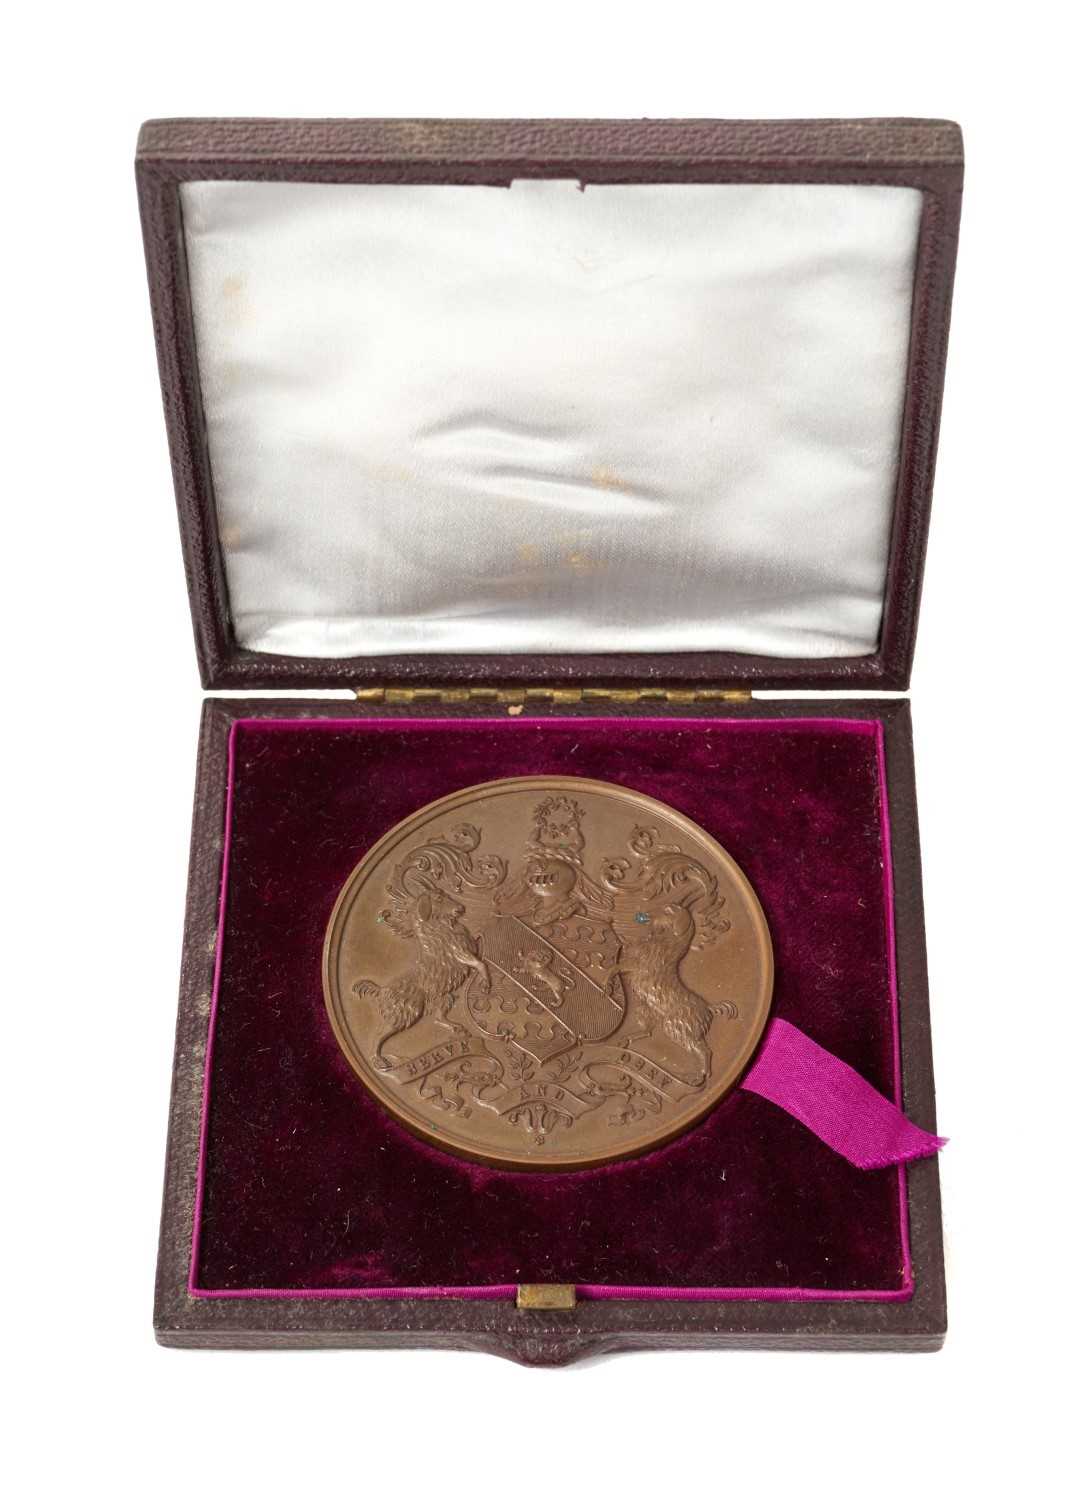 Lot 16 - Victorian bronze medallion awarded to HRH Prince Arthur